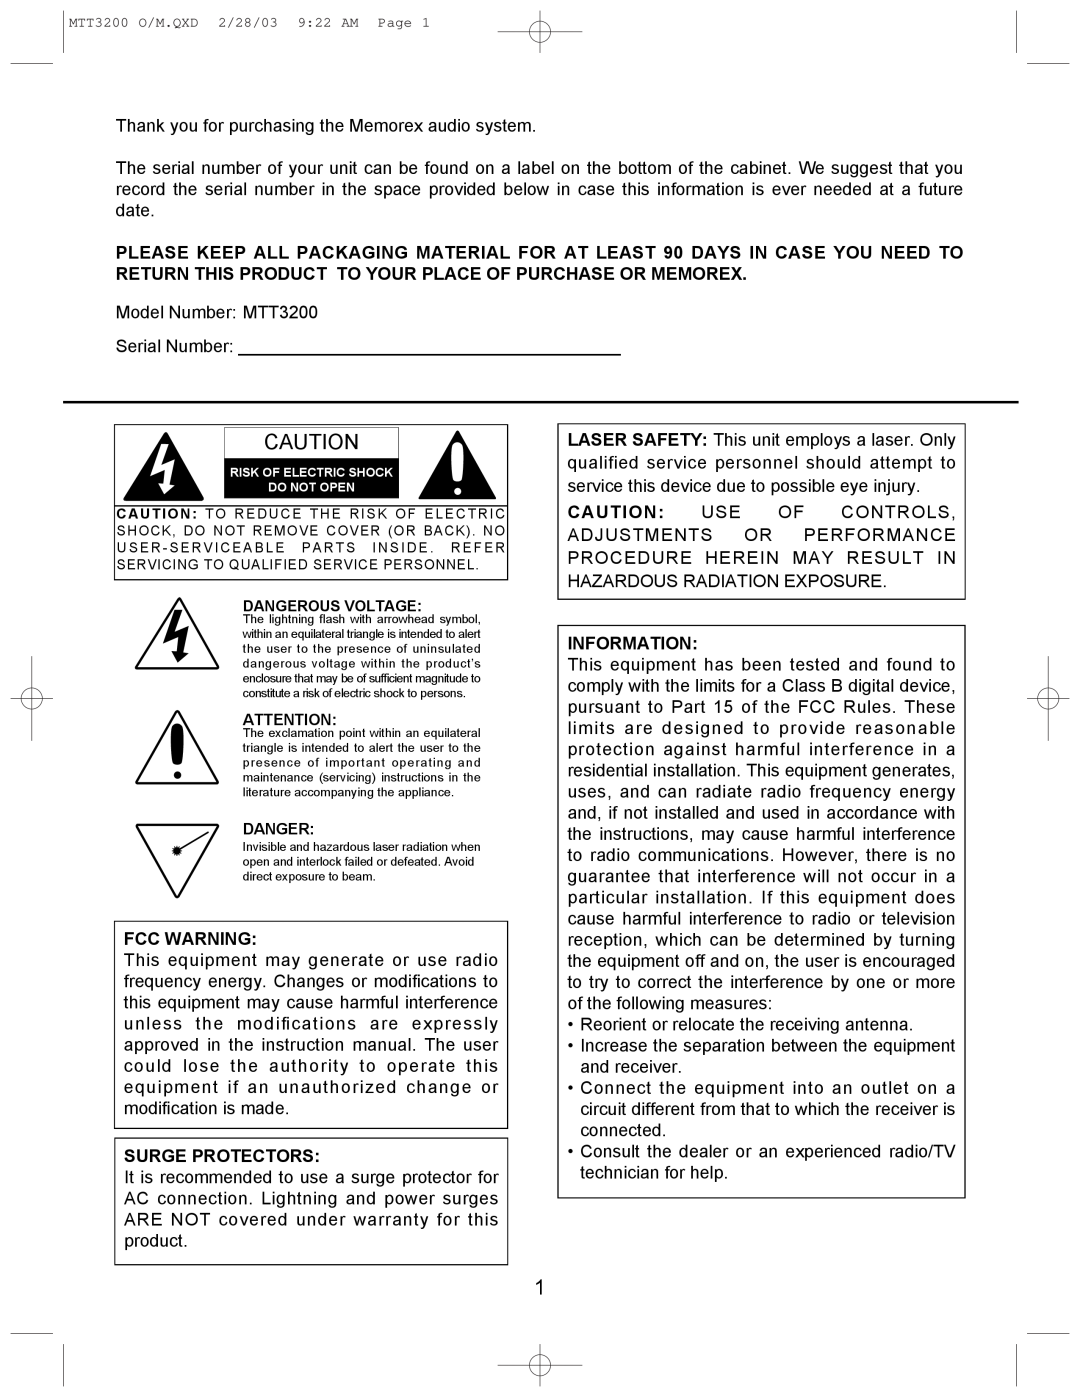 Memorex MTT3200 manual Fcc Warning, Surge Protectors, Information 